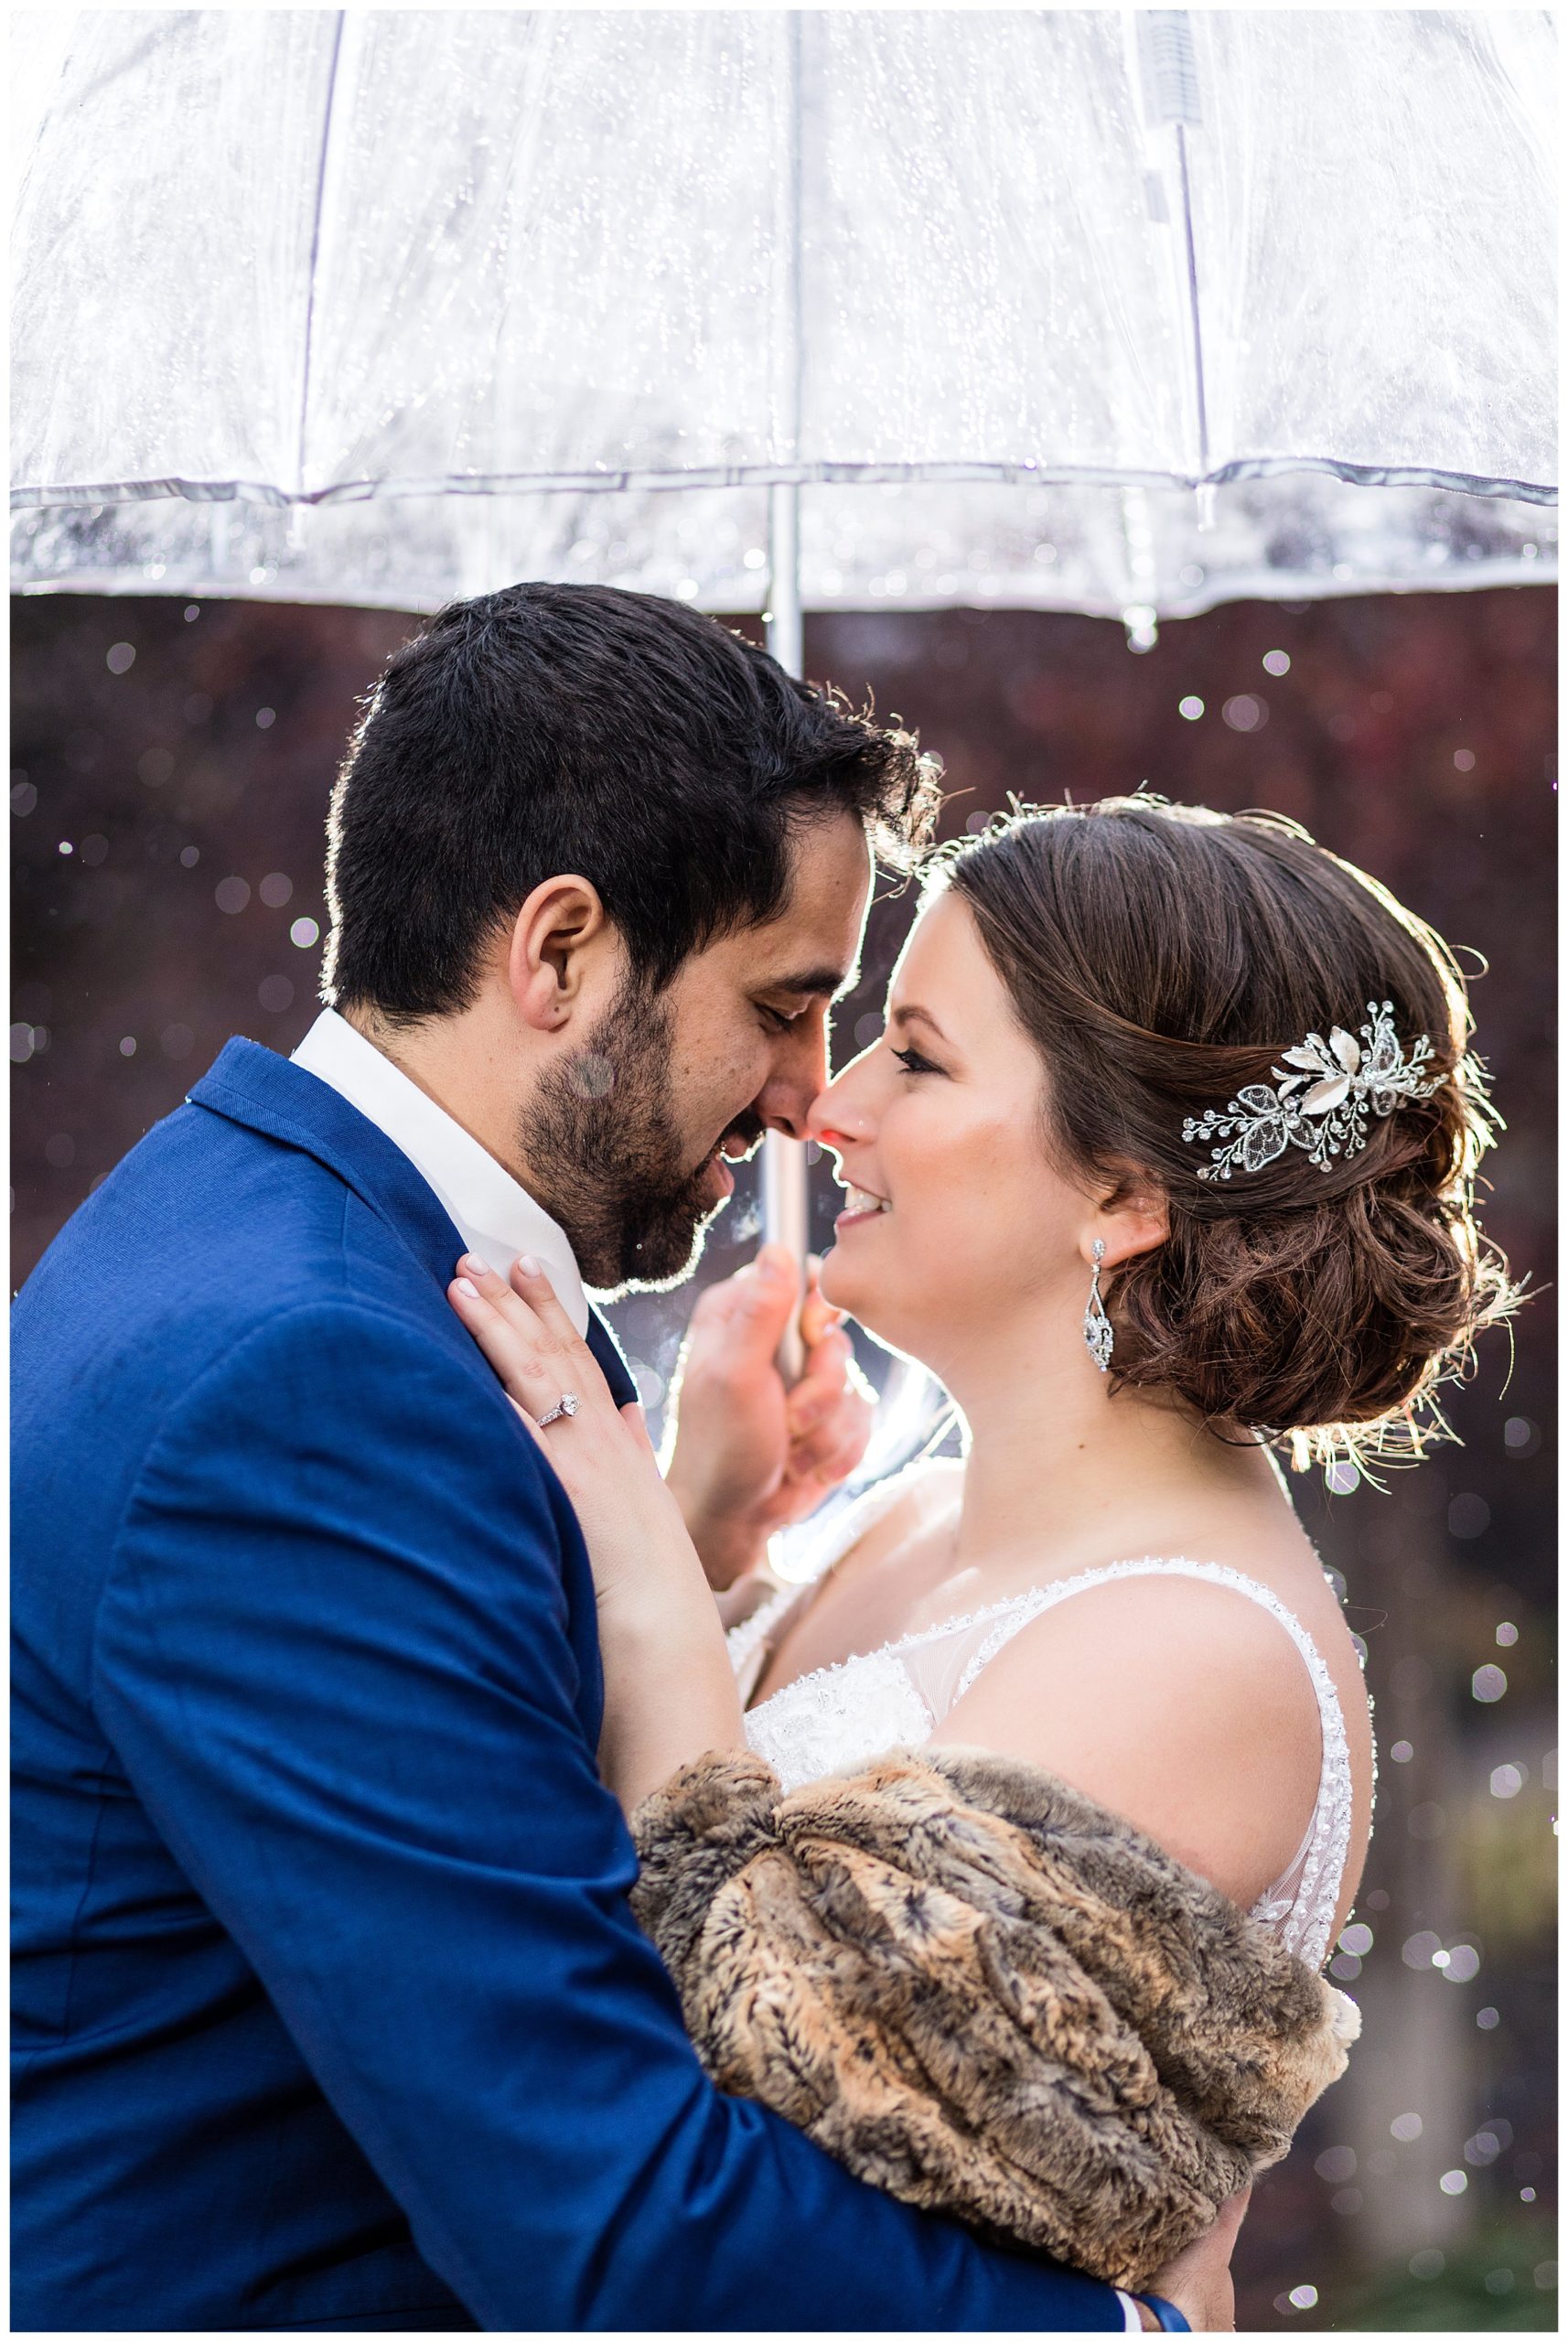 Bride and groom snuggle under umbrella in snow at Radnor Hotel winter wedding